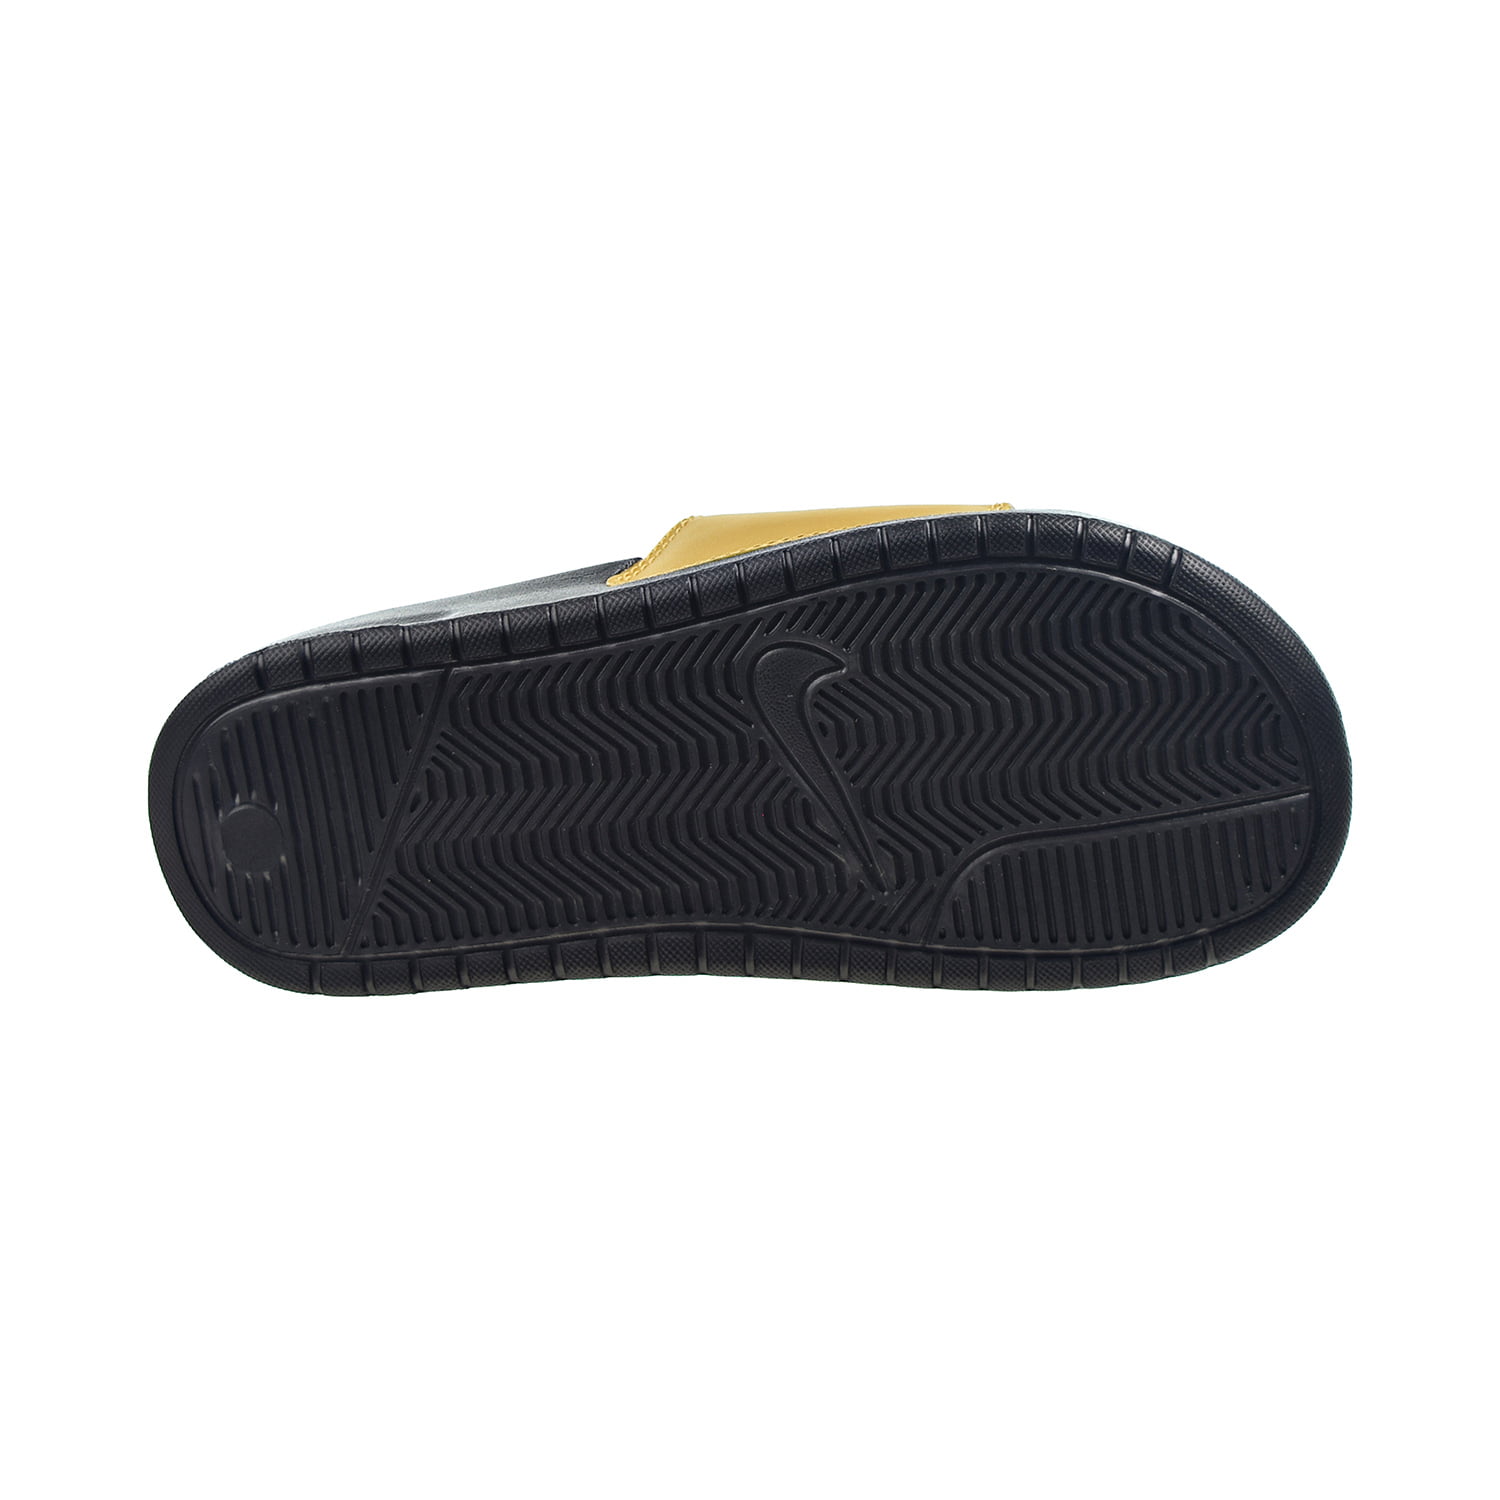 Nike Benassi JDI Women's Slide Sandals Black-Metallic Gold - Walmart.com